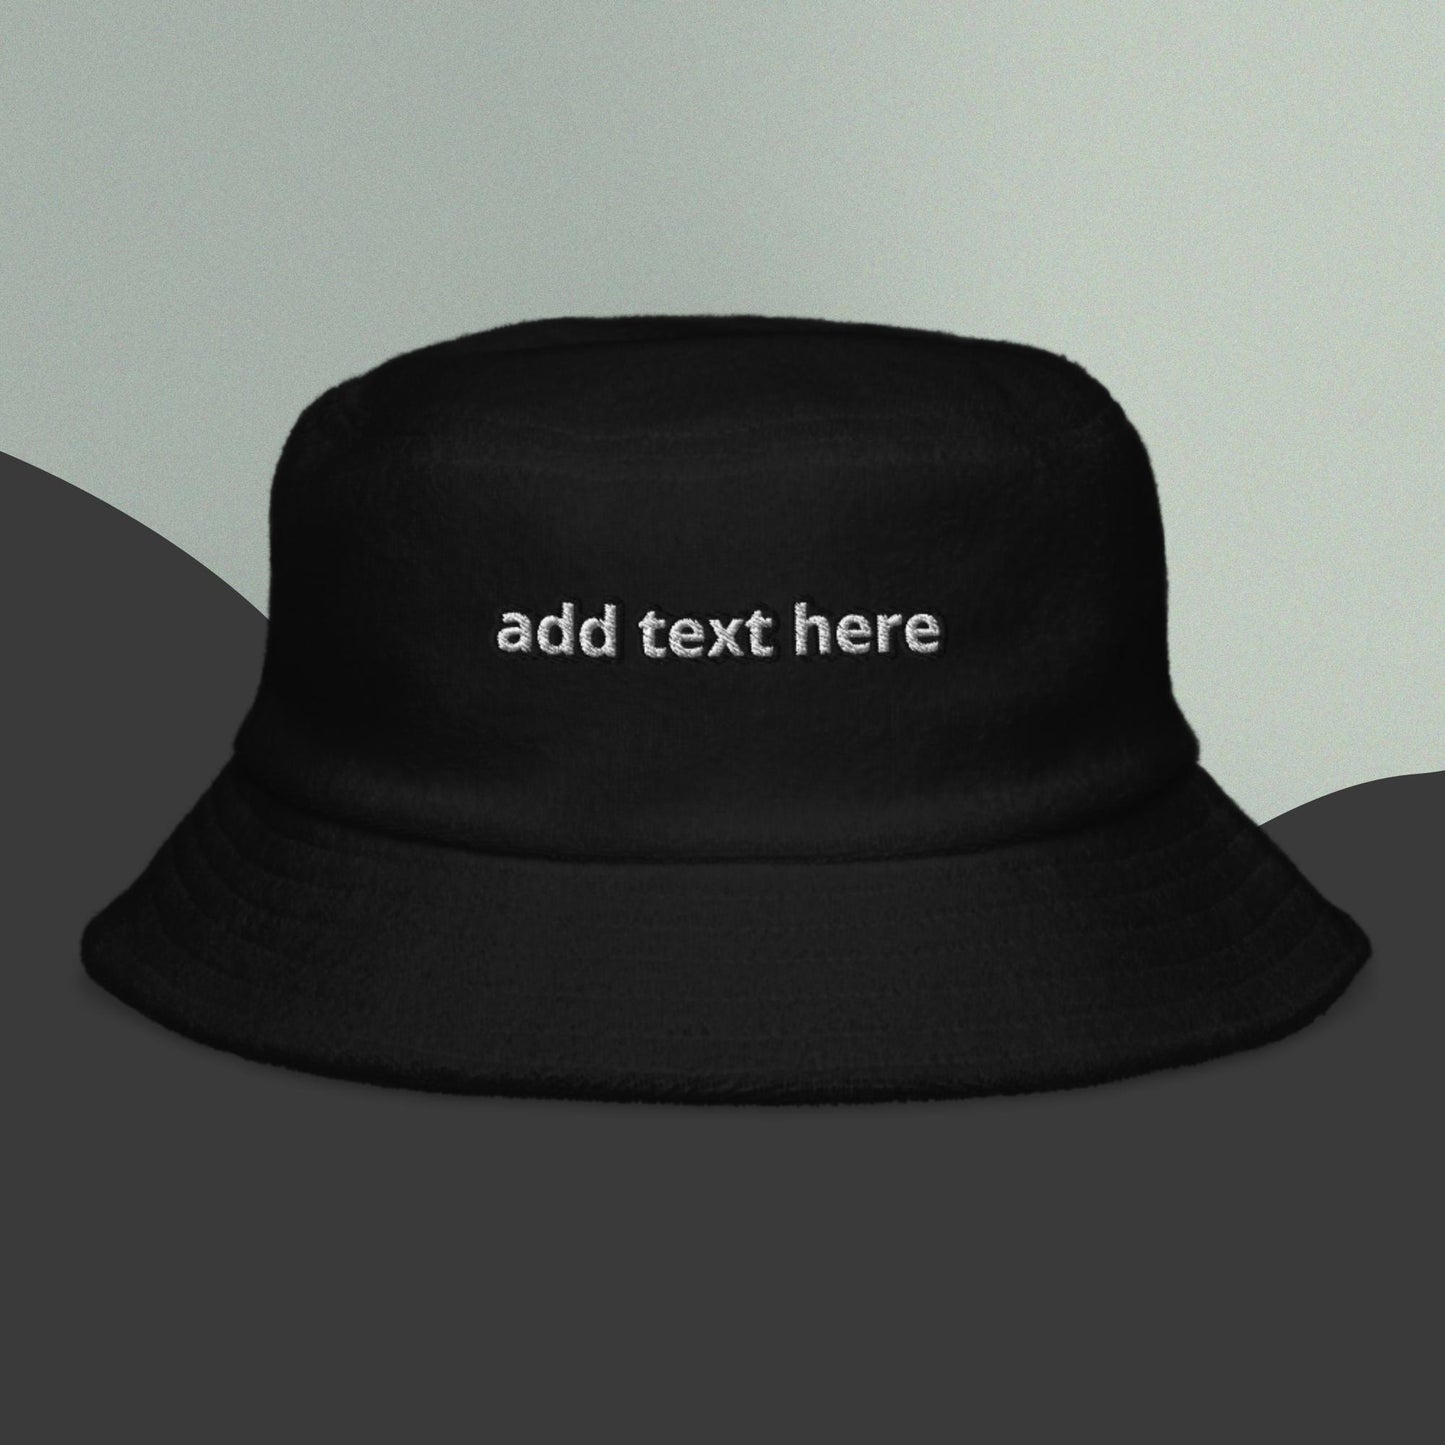 Terry Cloth Bucket Hat